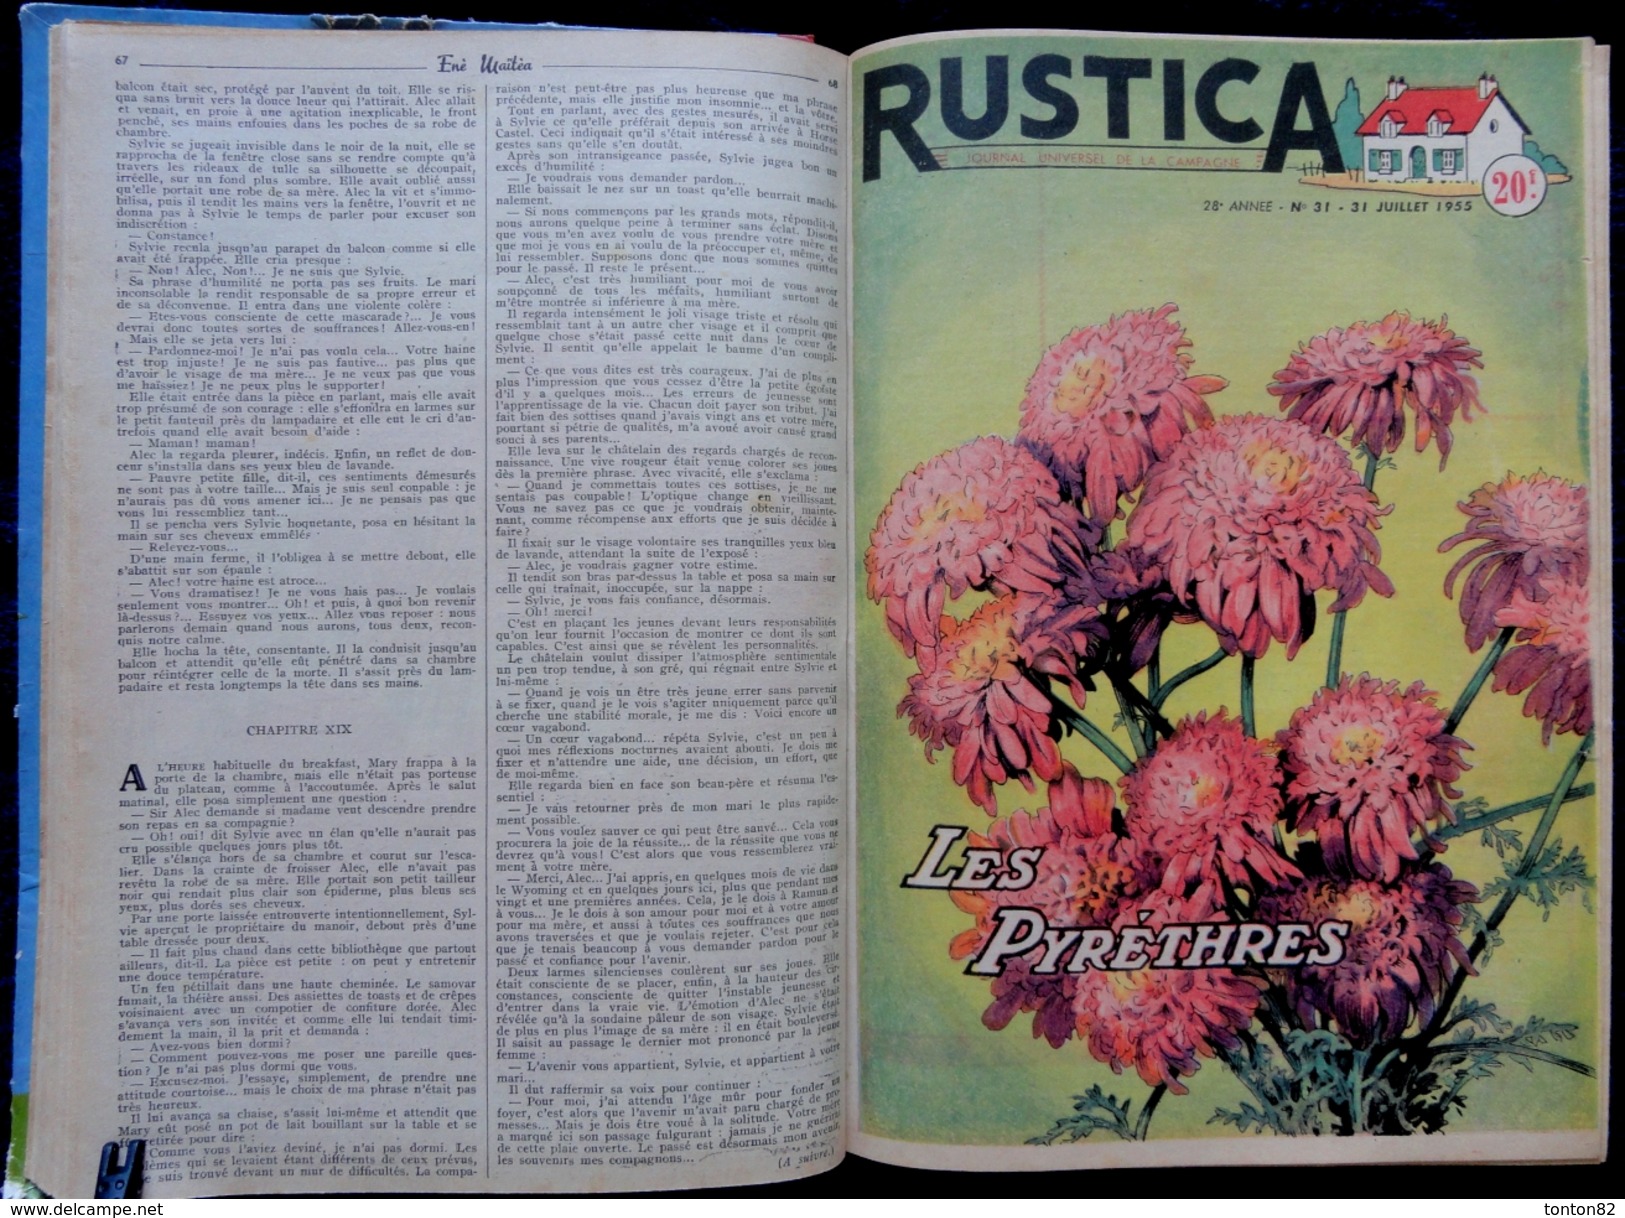 RUSTICA - Album série n° 6 - ( Année 1955  )